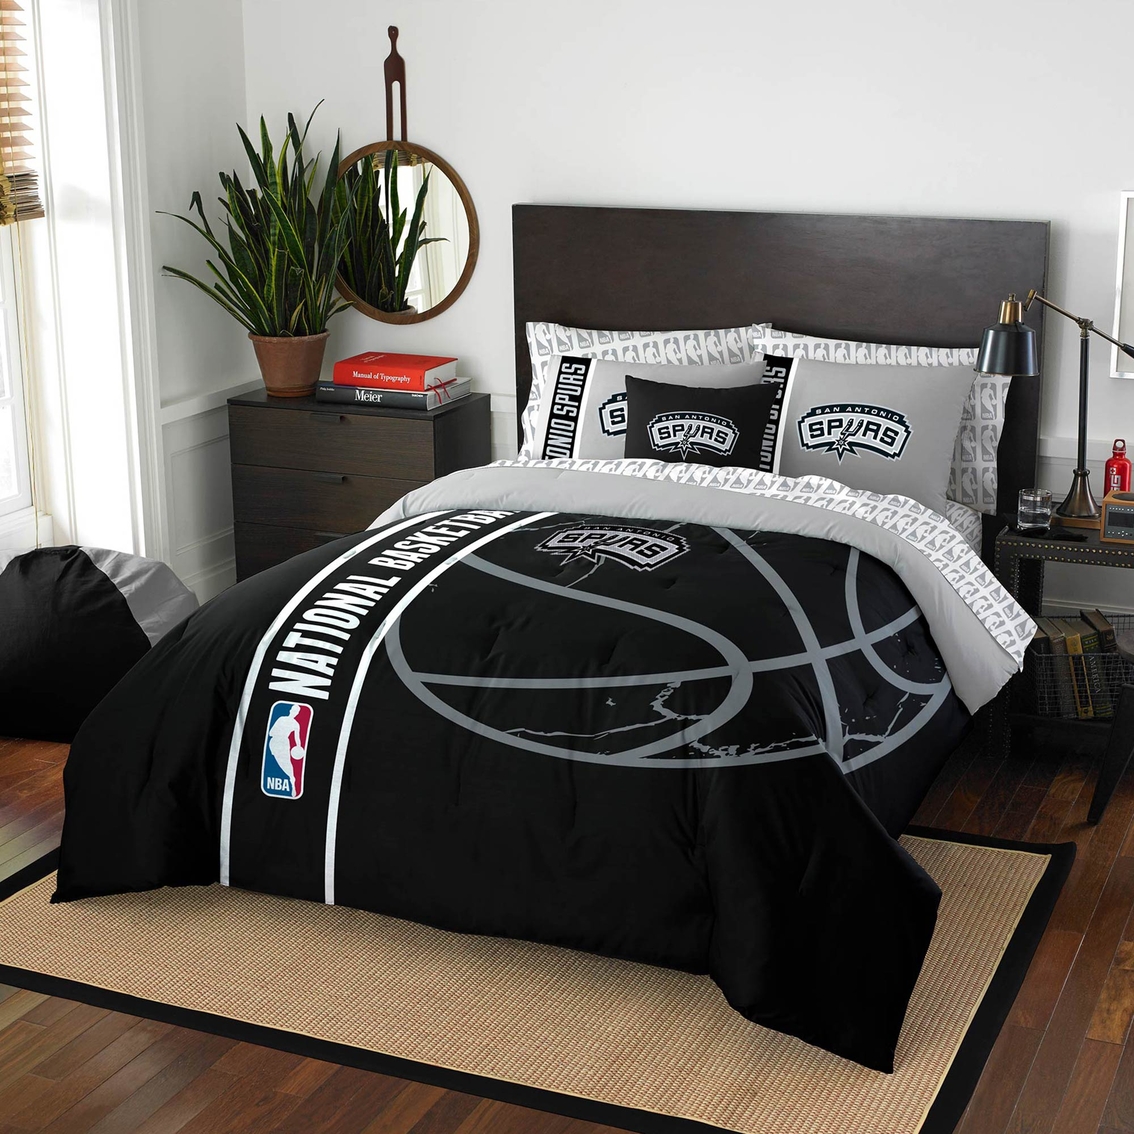 Northwest Nba San Antonio Spurs Comforter Set Bedding